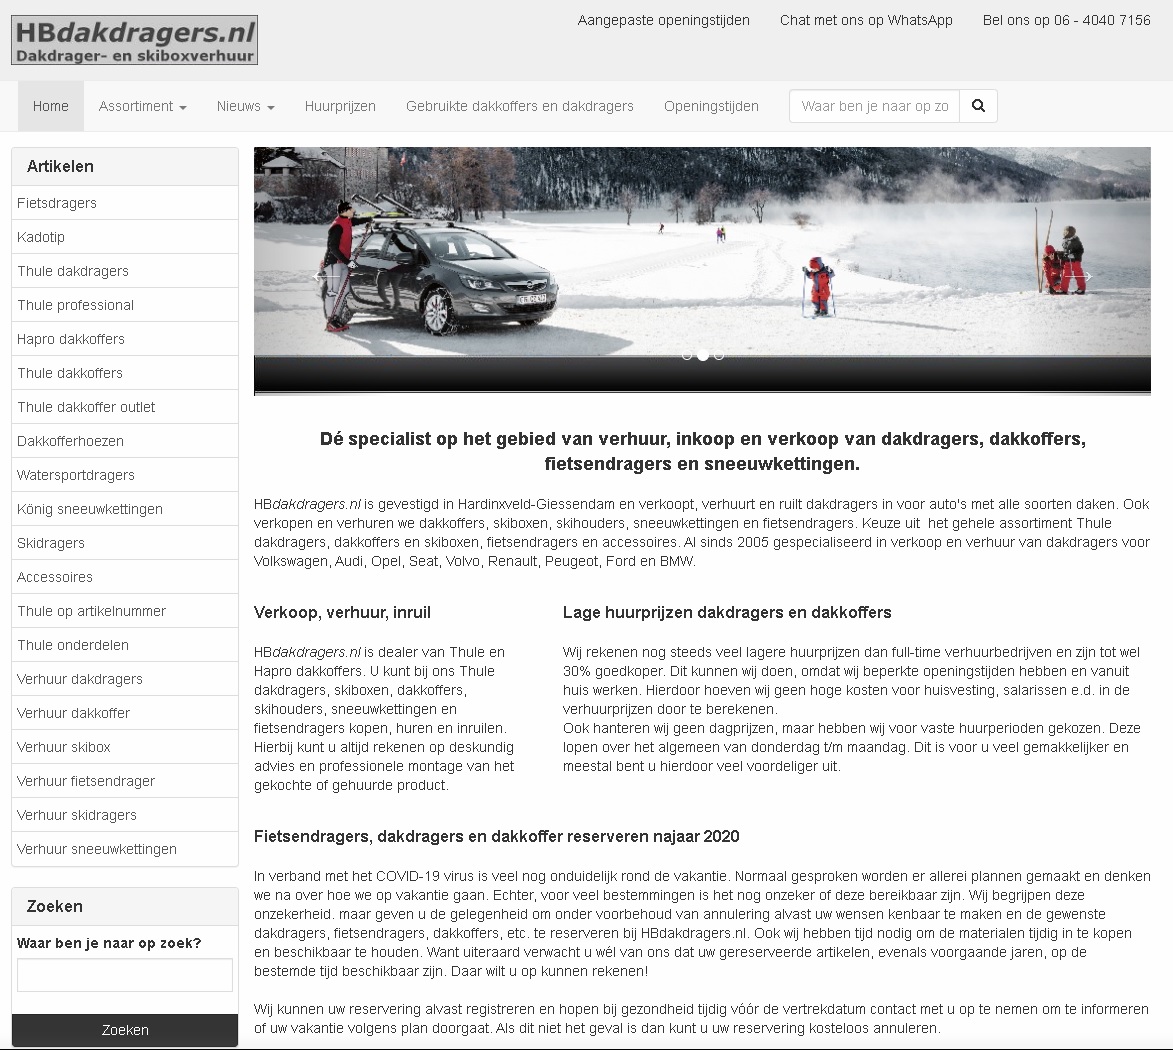 Website HBdakdragers.nl 2020